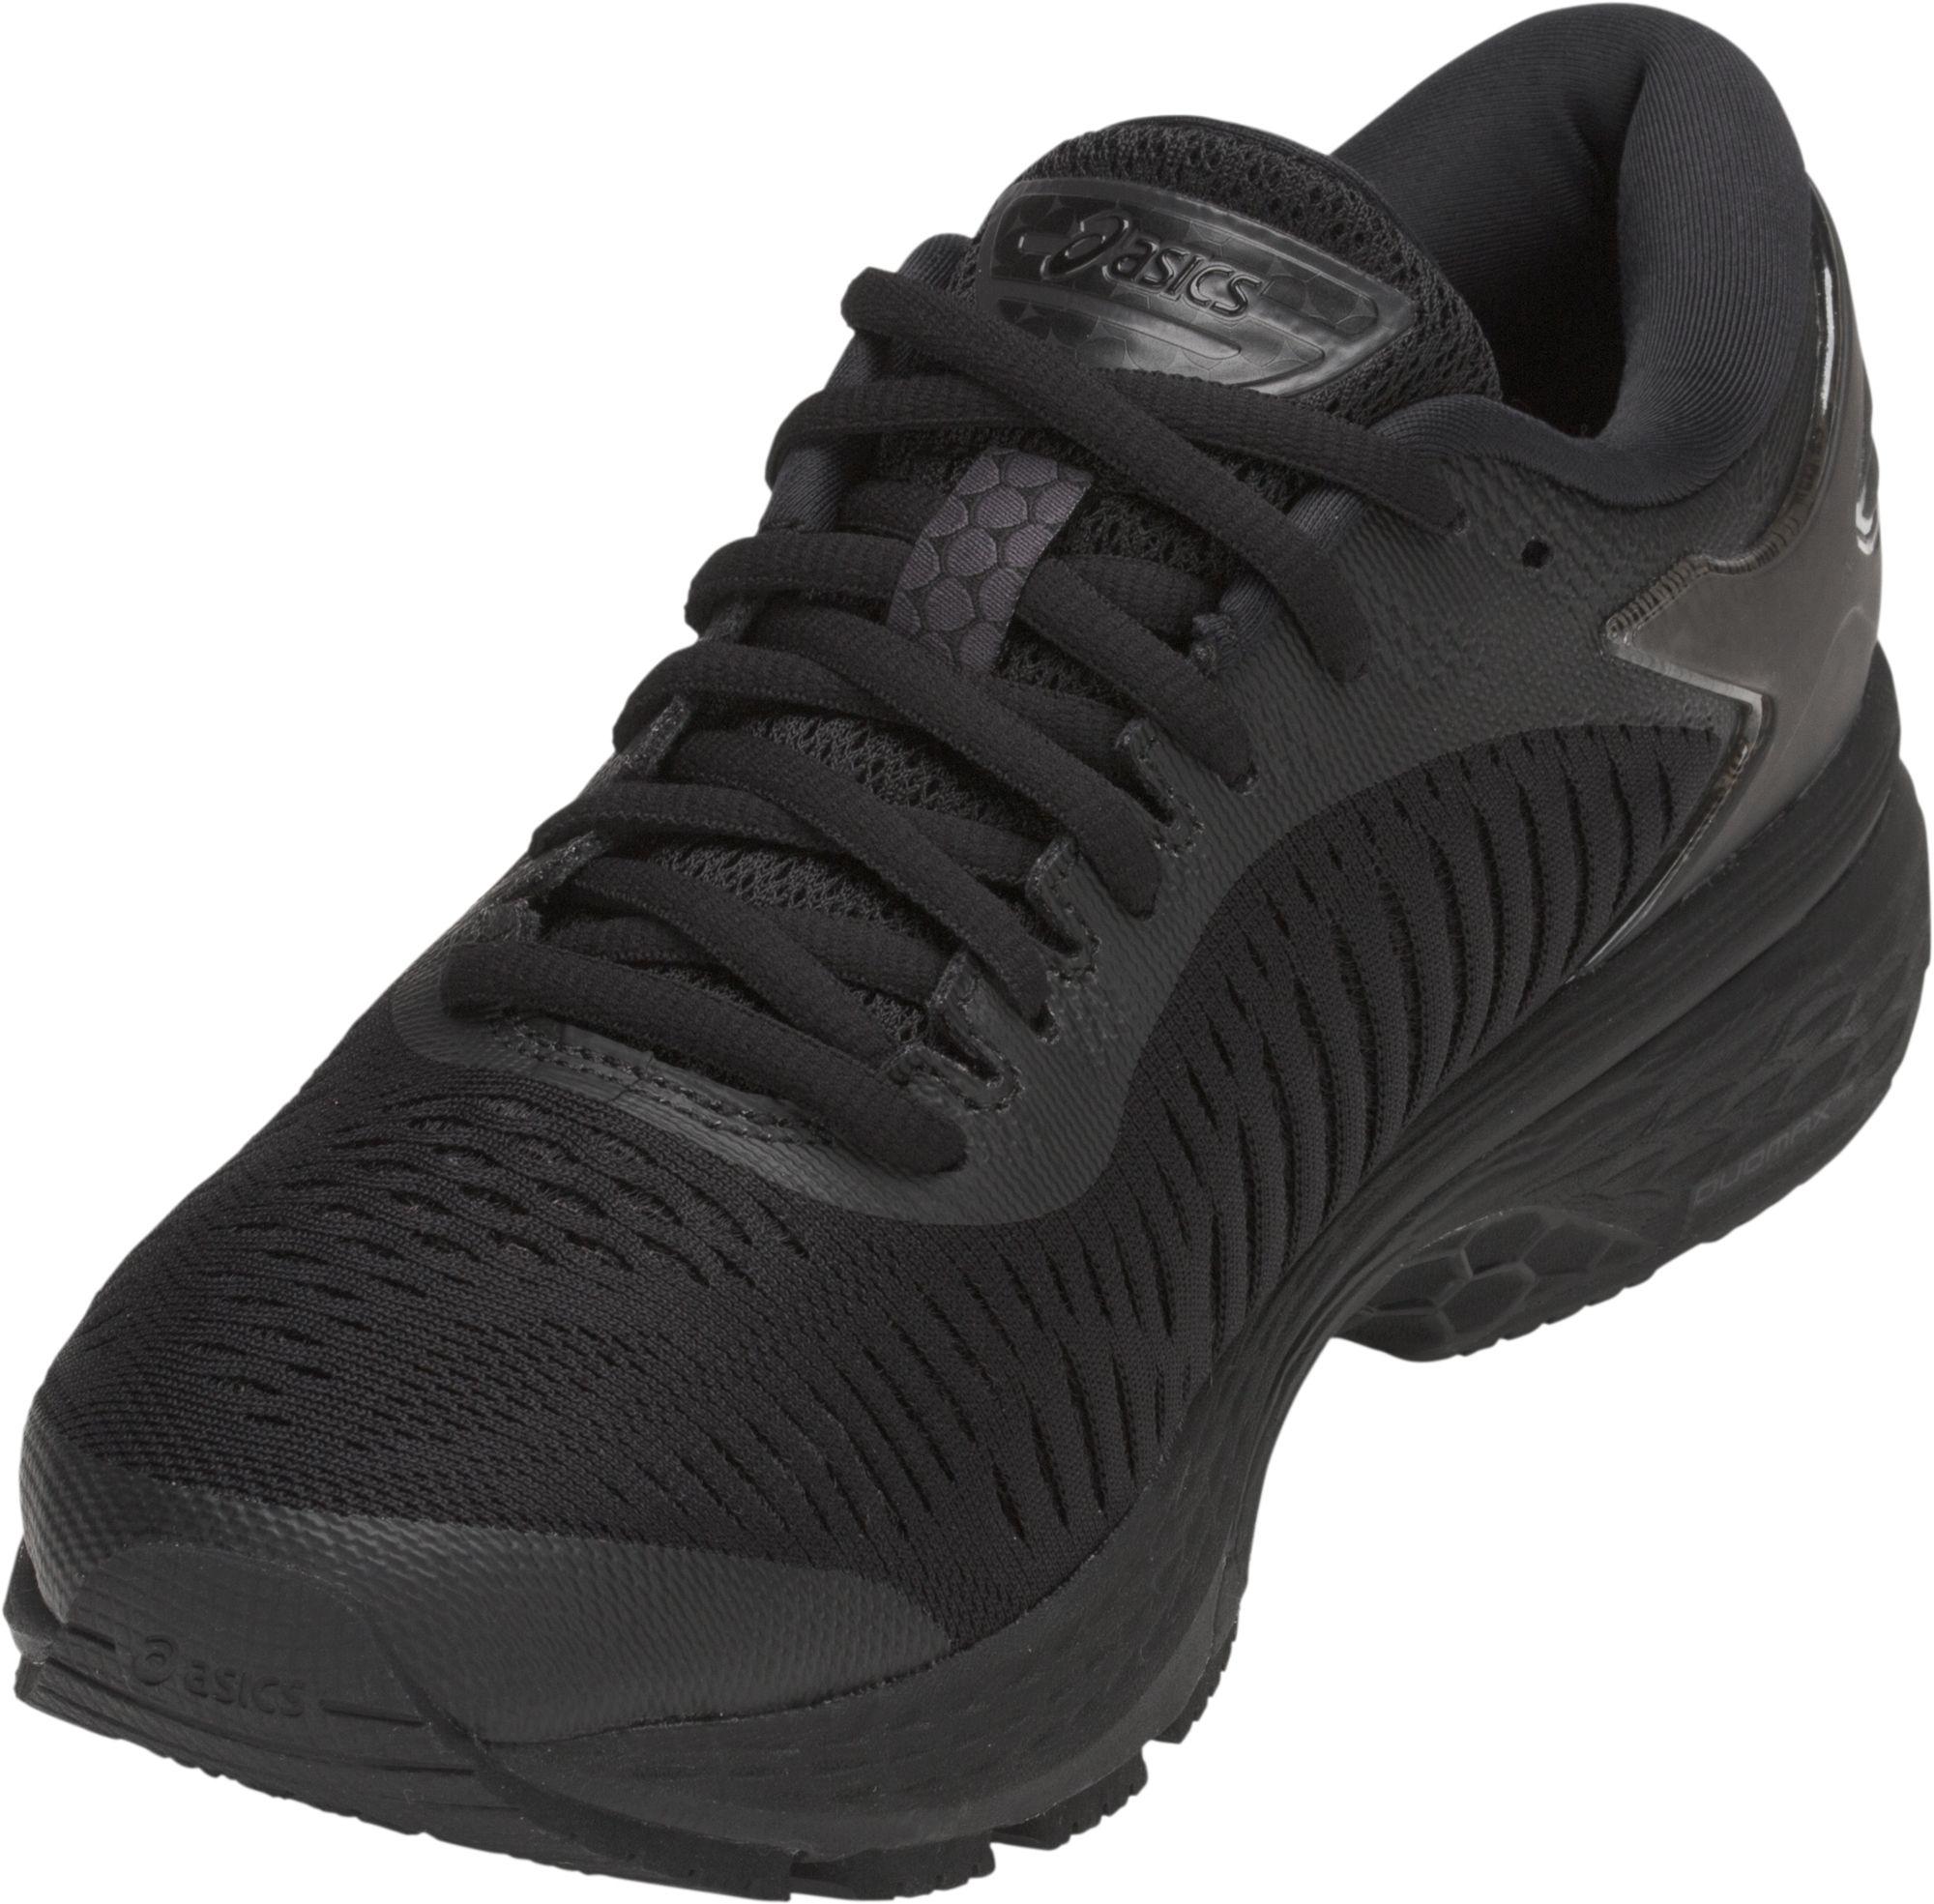 Asics Gel-kayano 25 Running Shoes in Black/Black (Black) - Lyst